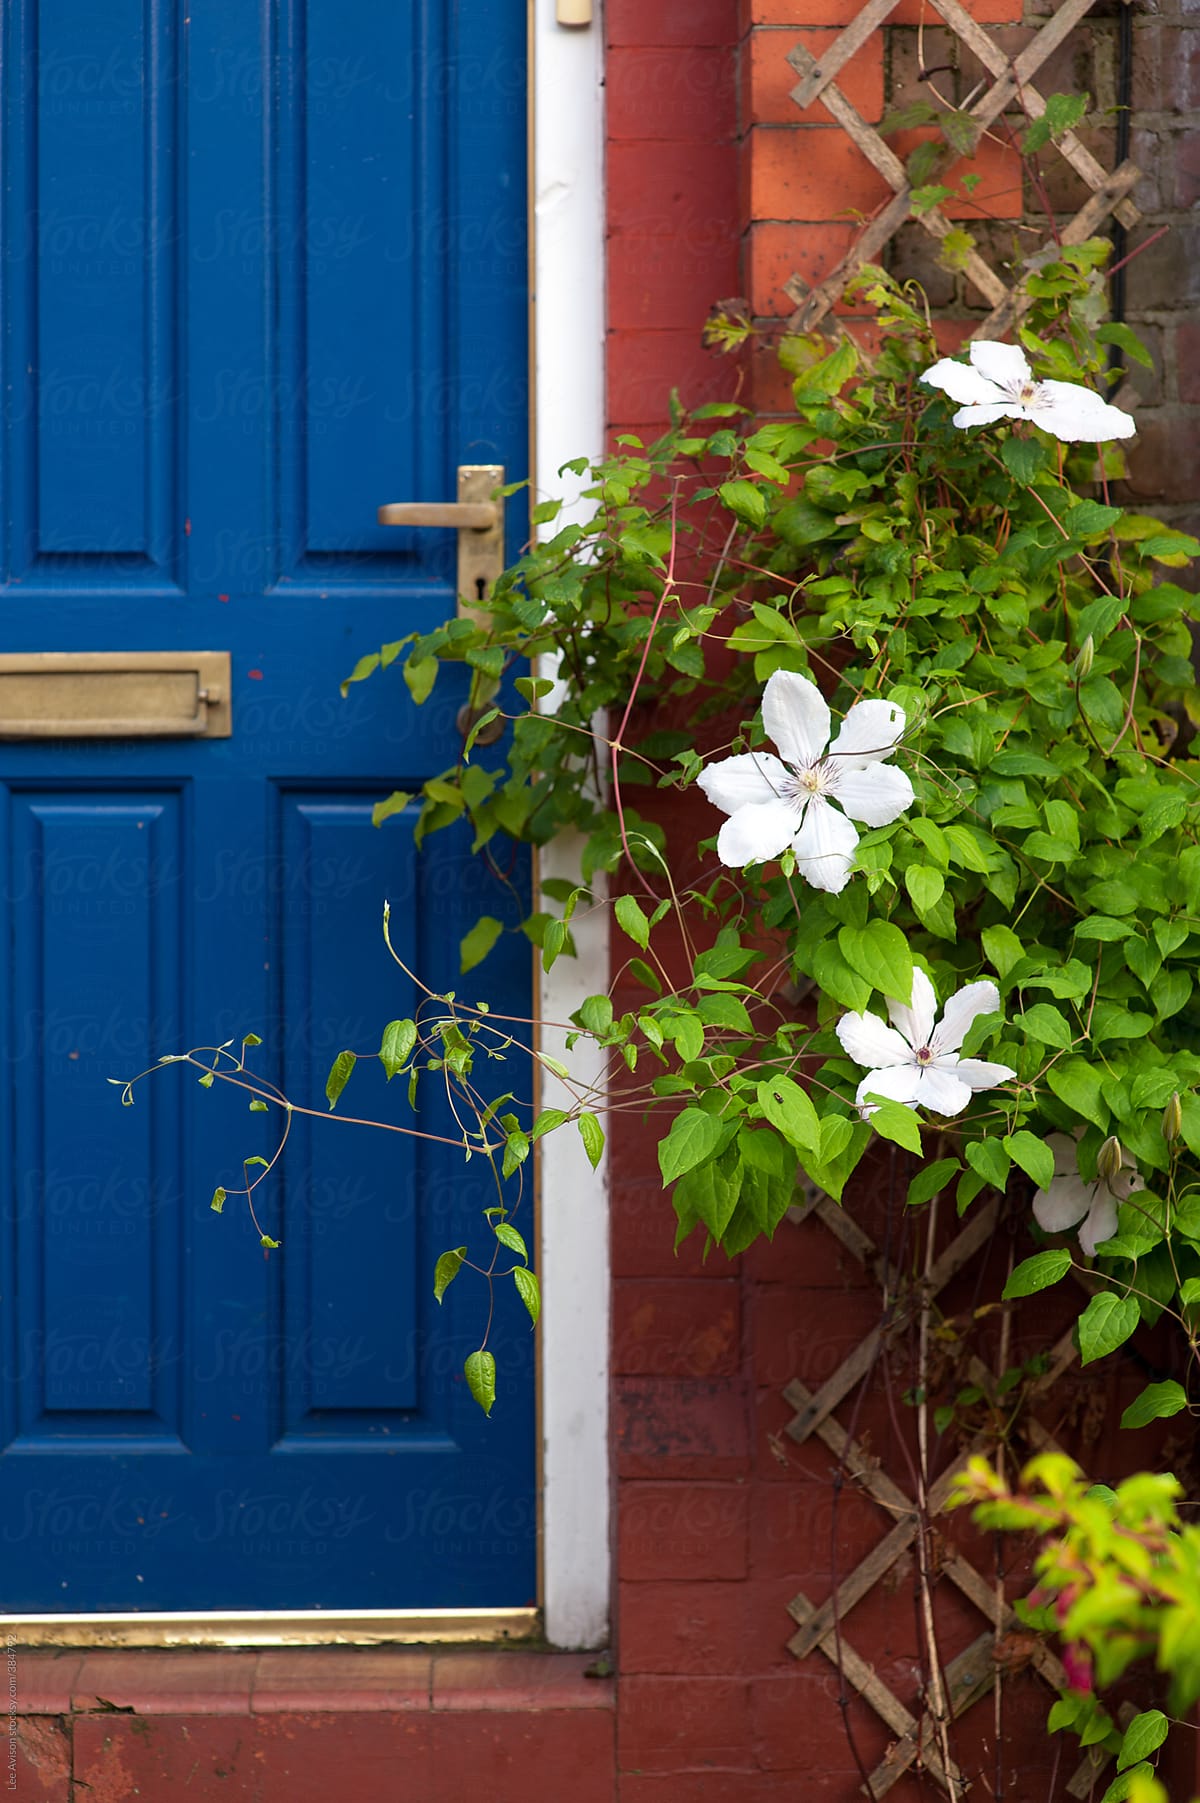 clematis flower growing alongside a blue front door